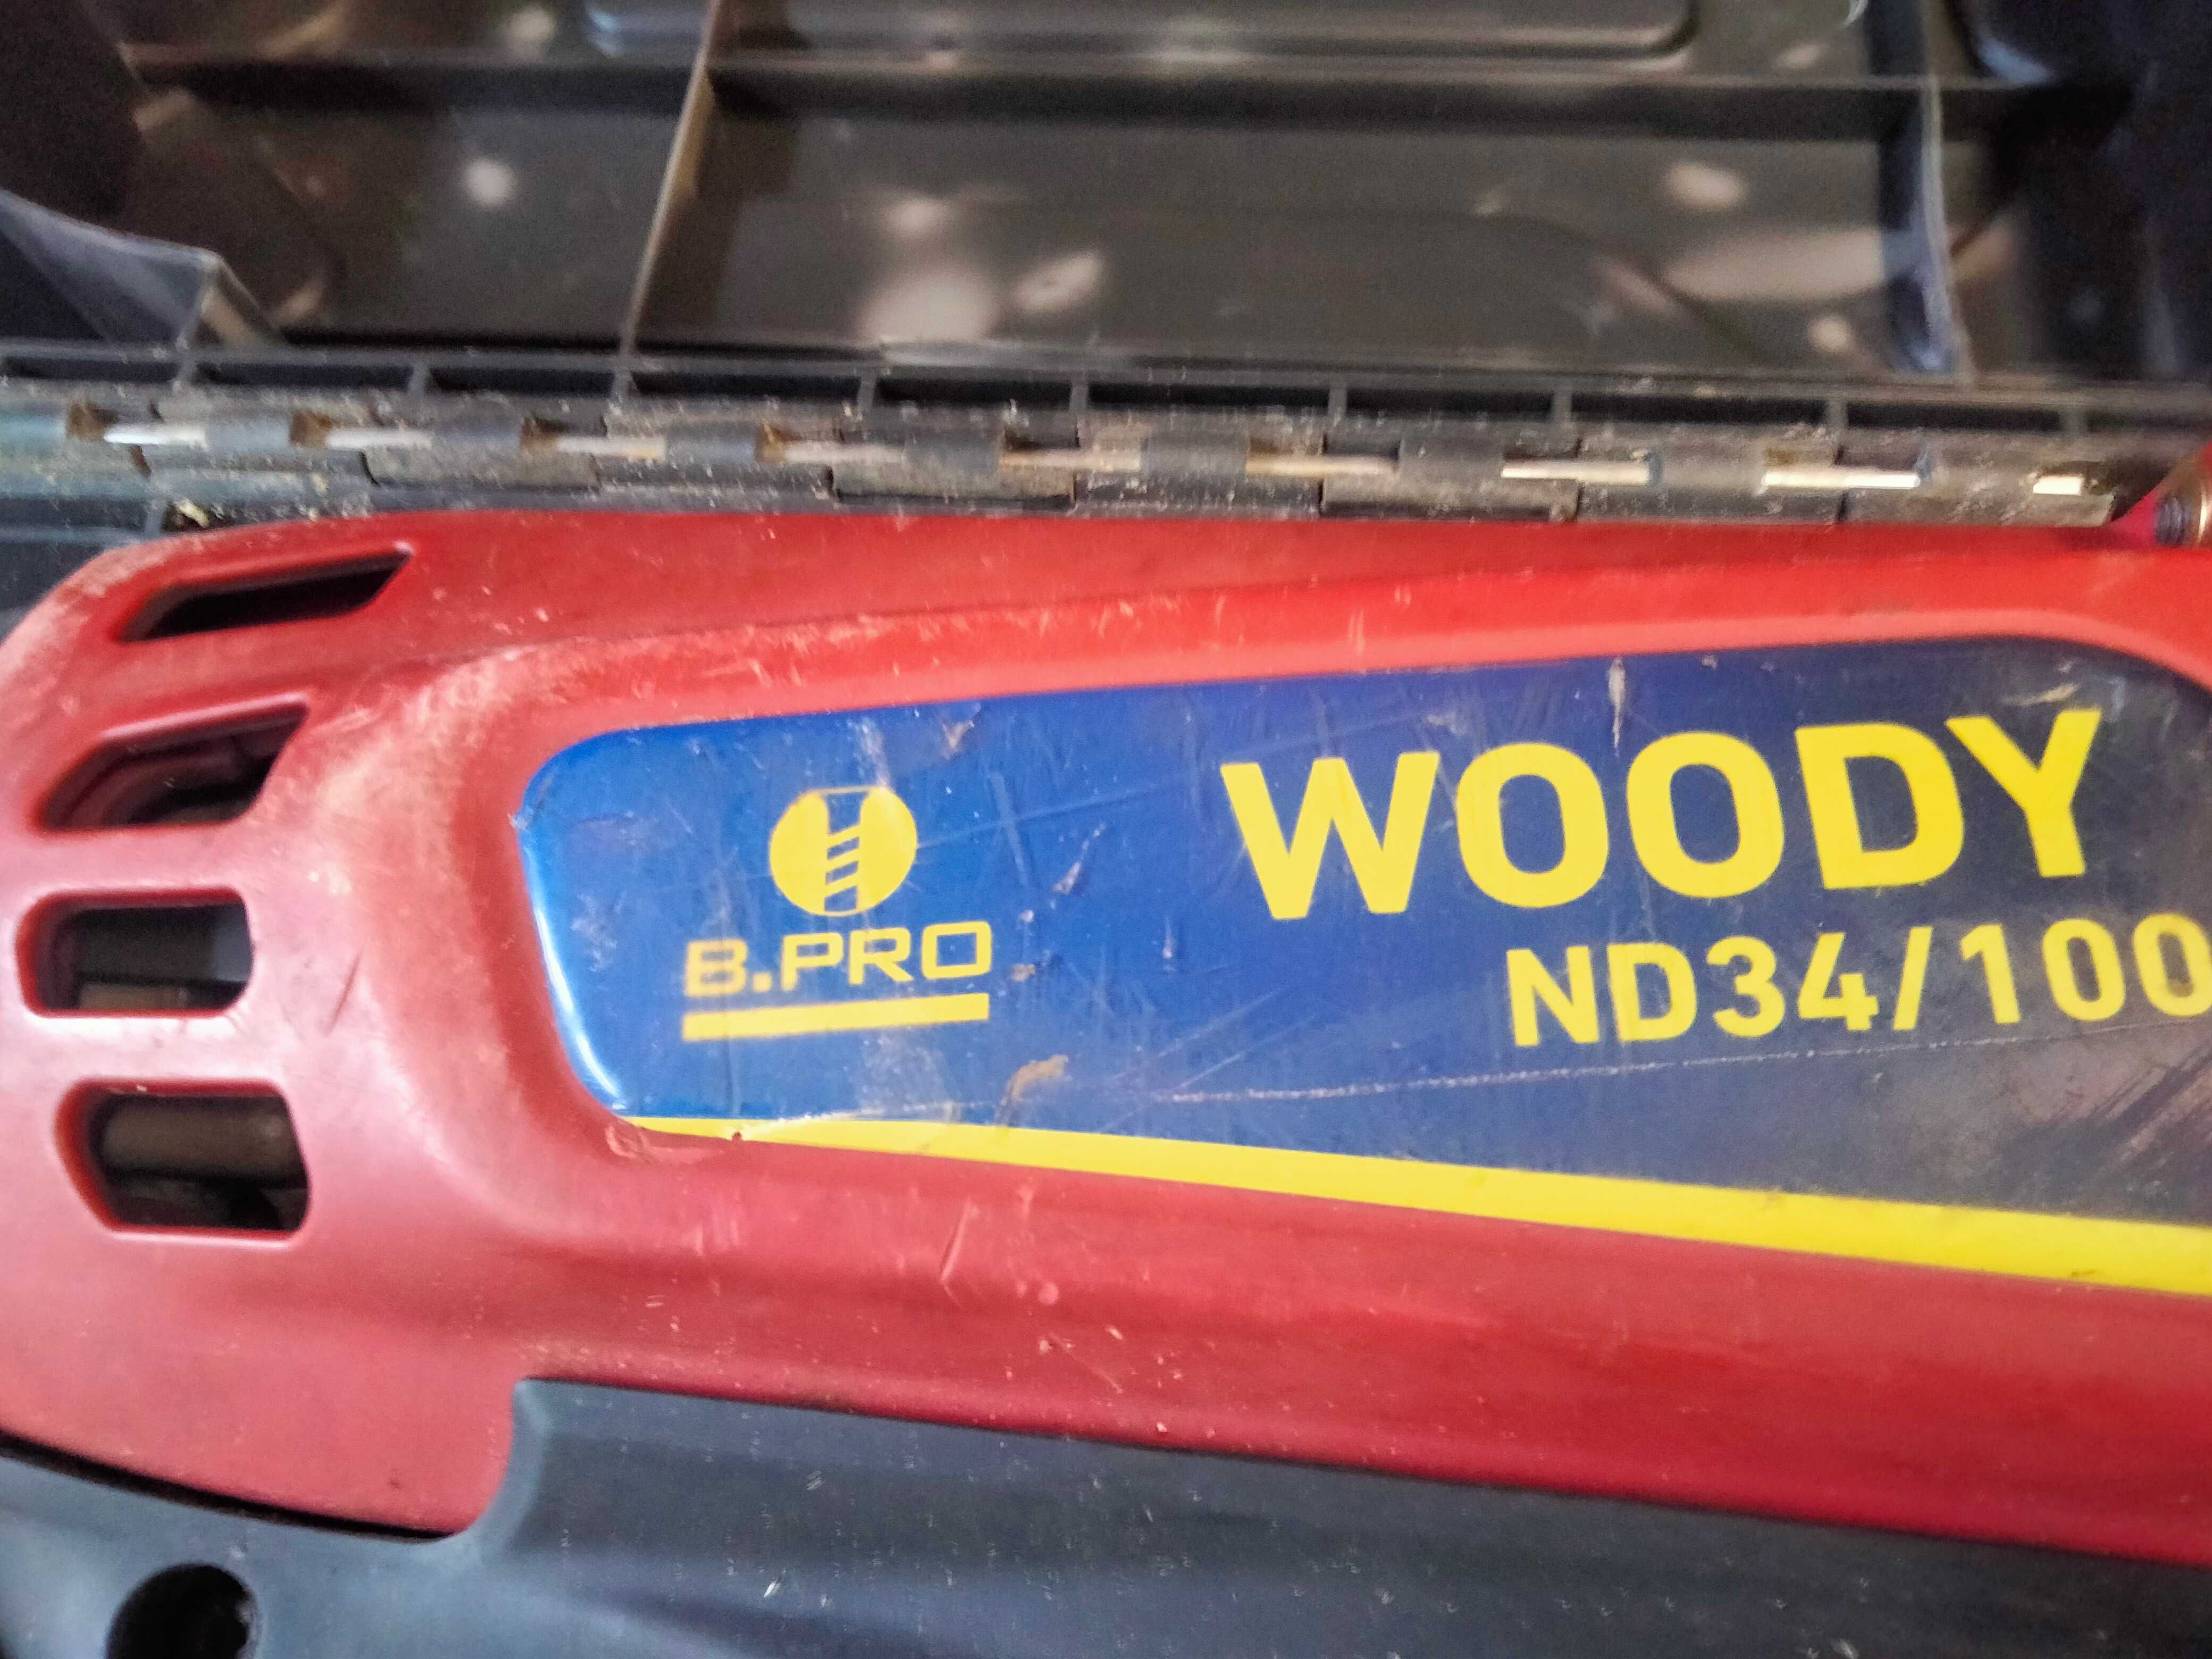 gwoździarki gazowe  bi pro woody nd 34/100